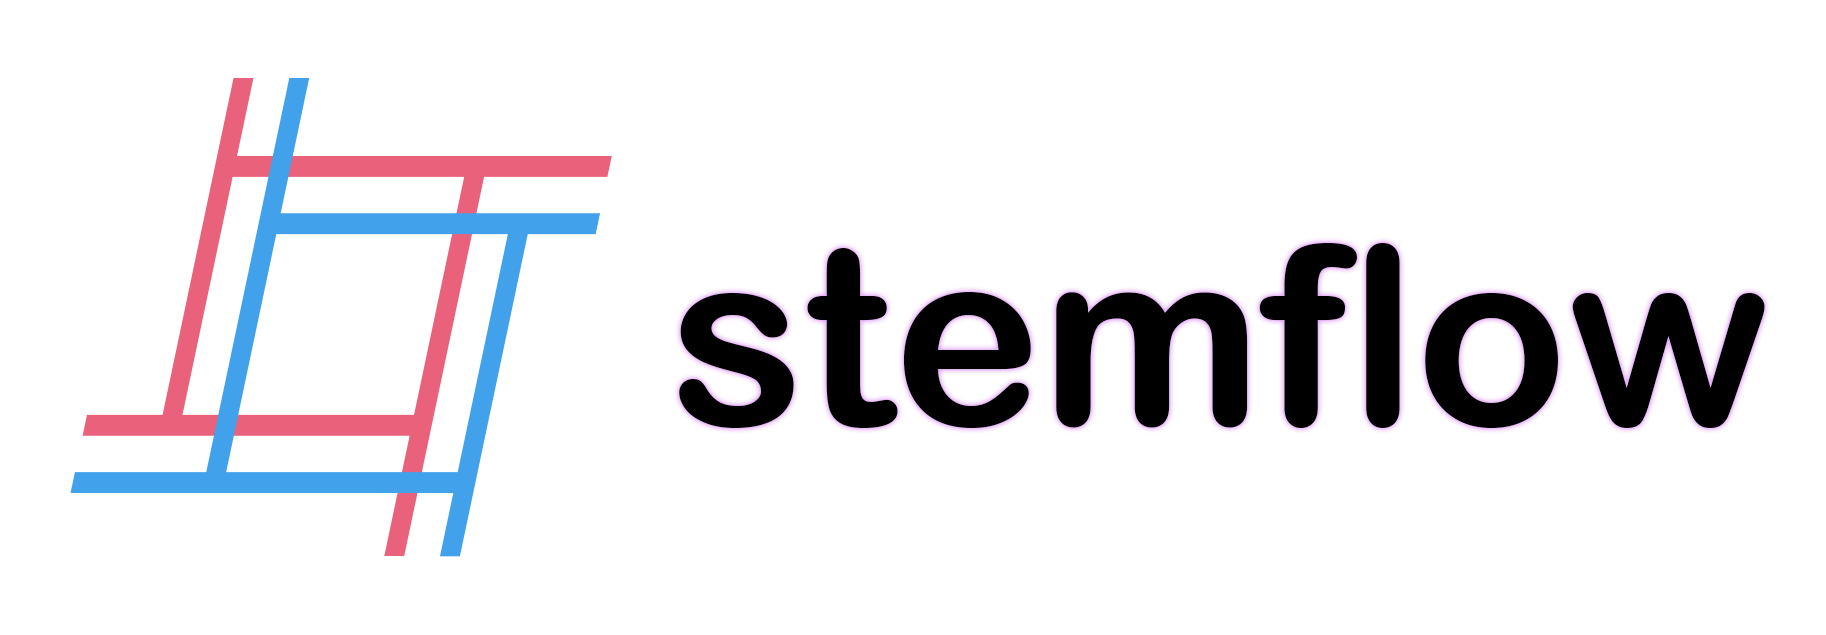 stemflow logo